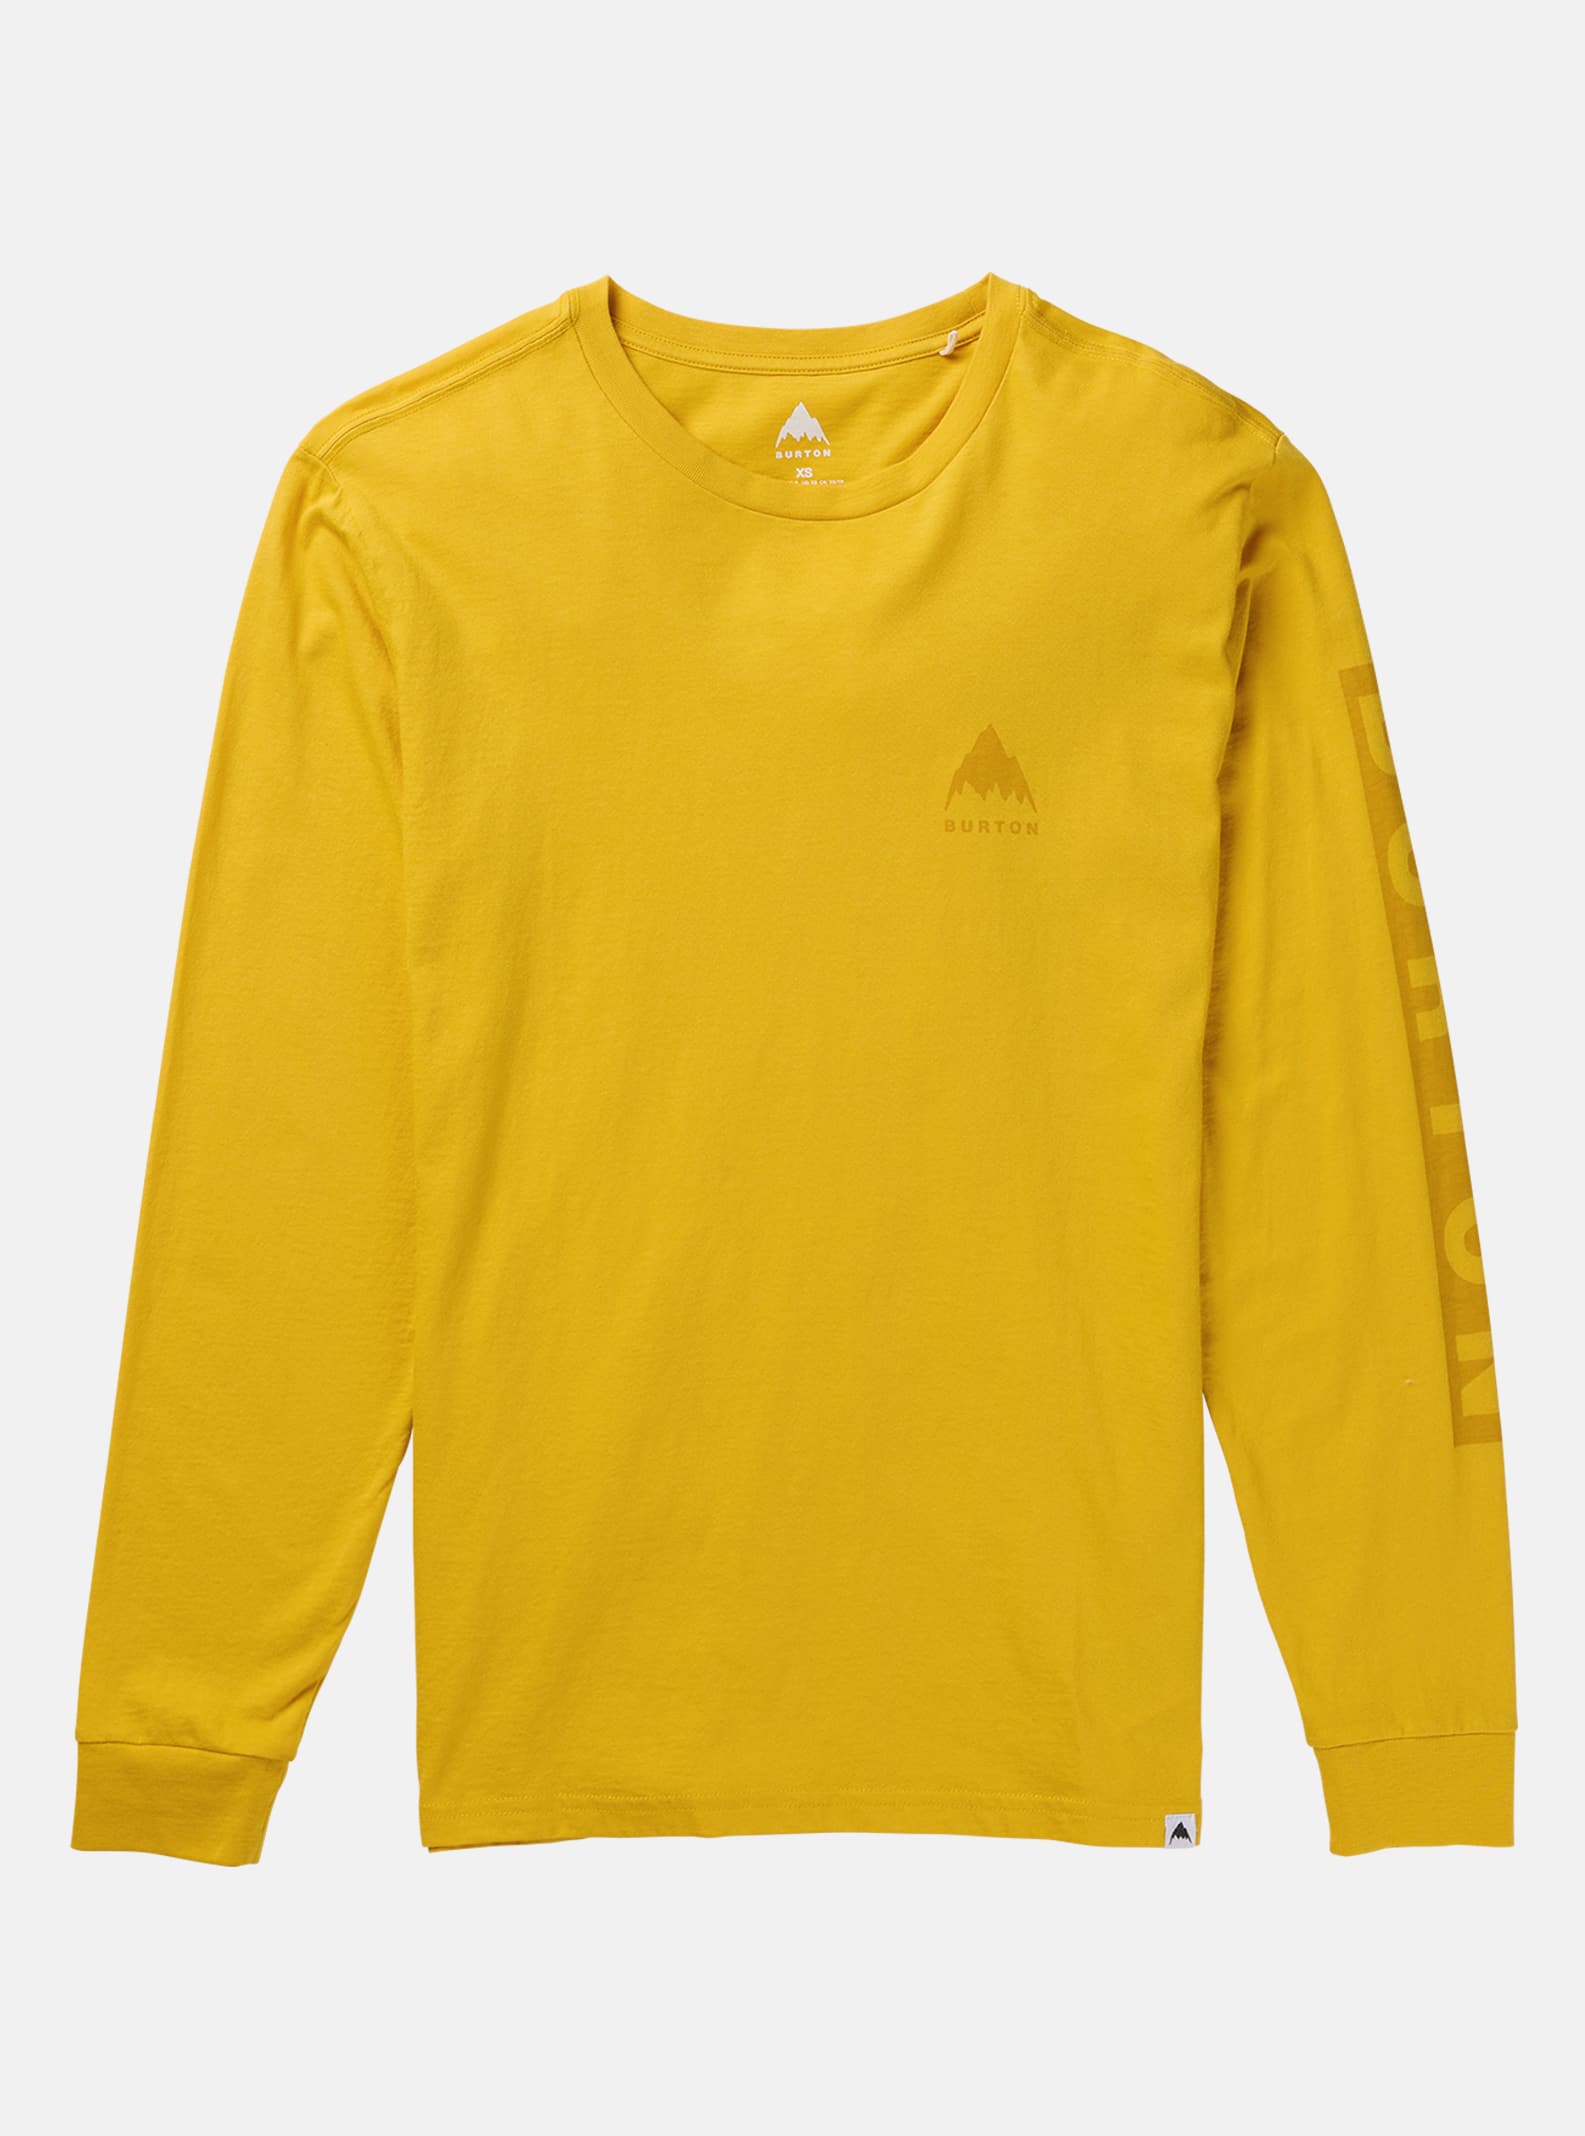 Burton Elite långärmad t-shirt, Goldenrod, XS